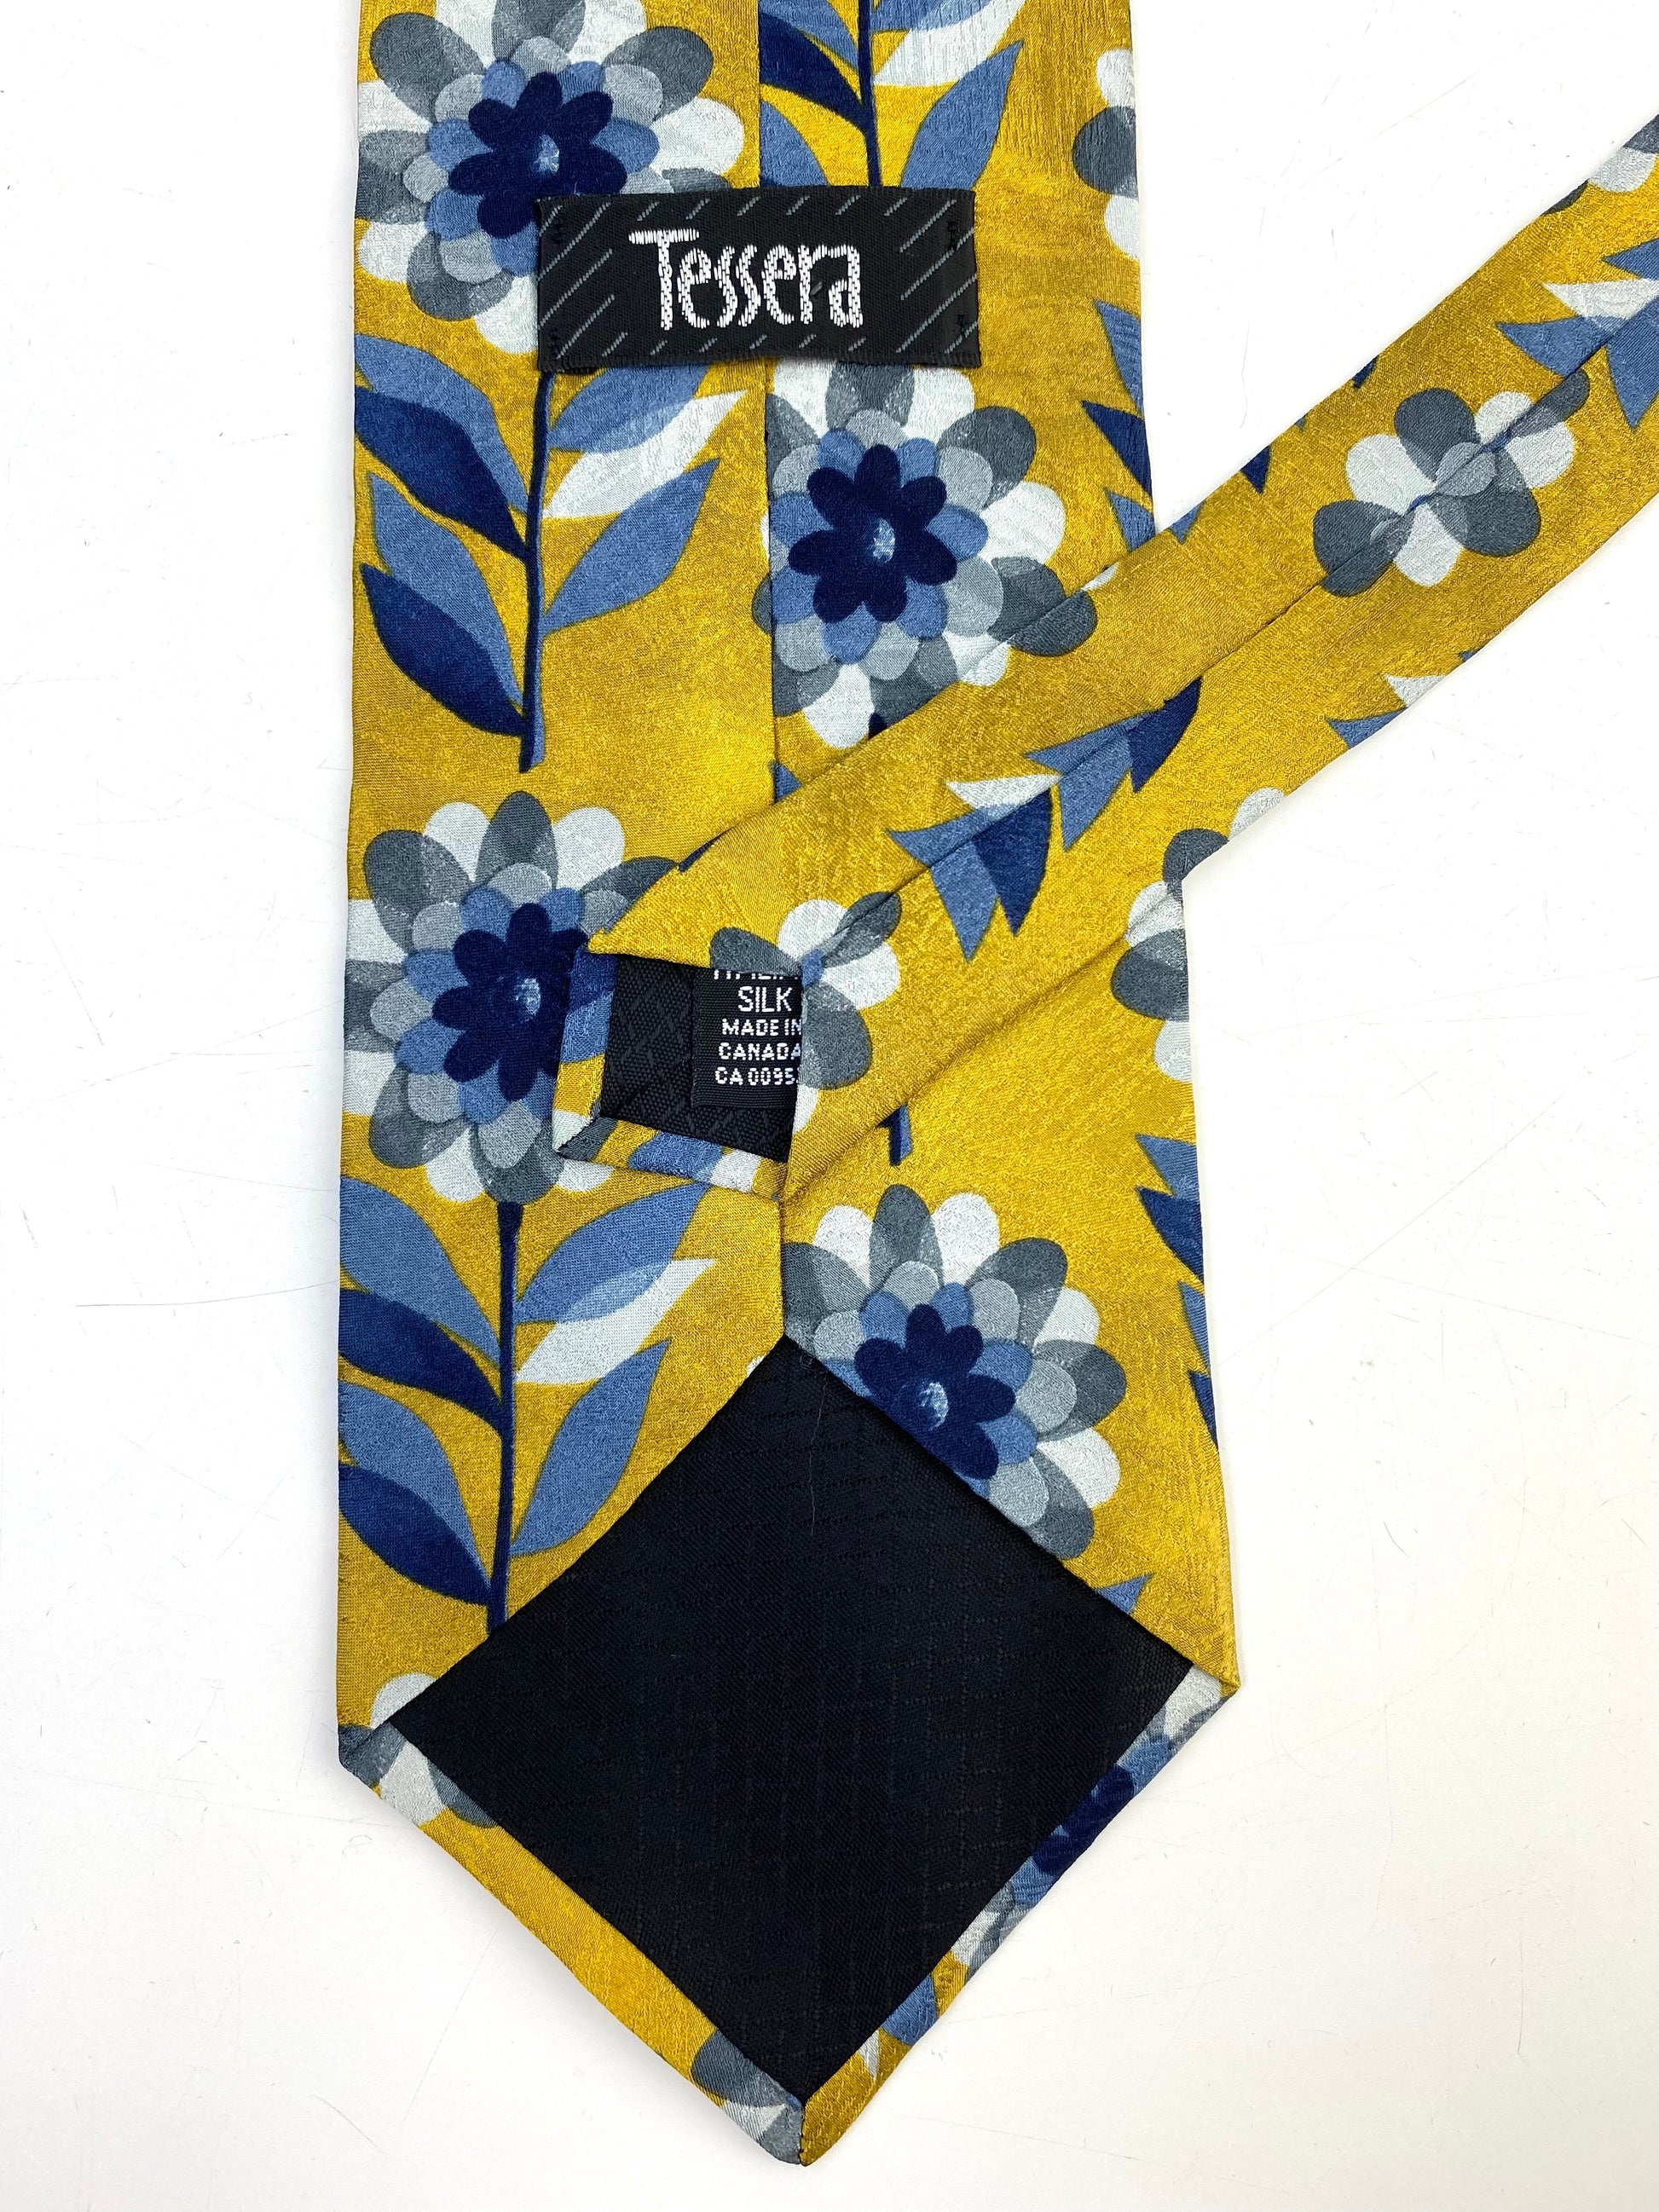 Back and labels of: 90s Deadstock Silk Necktie, Men's Vintage Gold/ Blue/ Grey Floral Pattern Tie, NOS